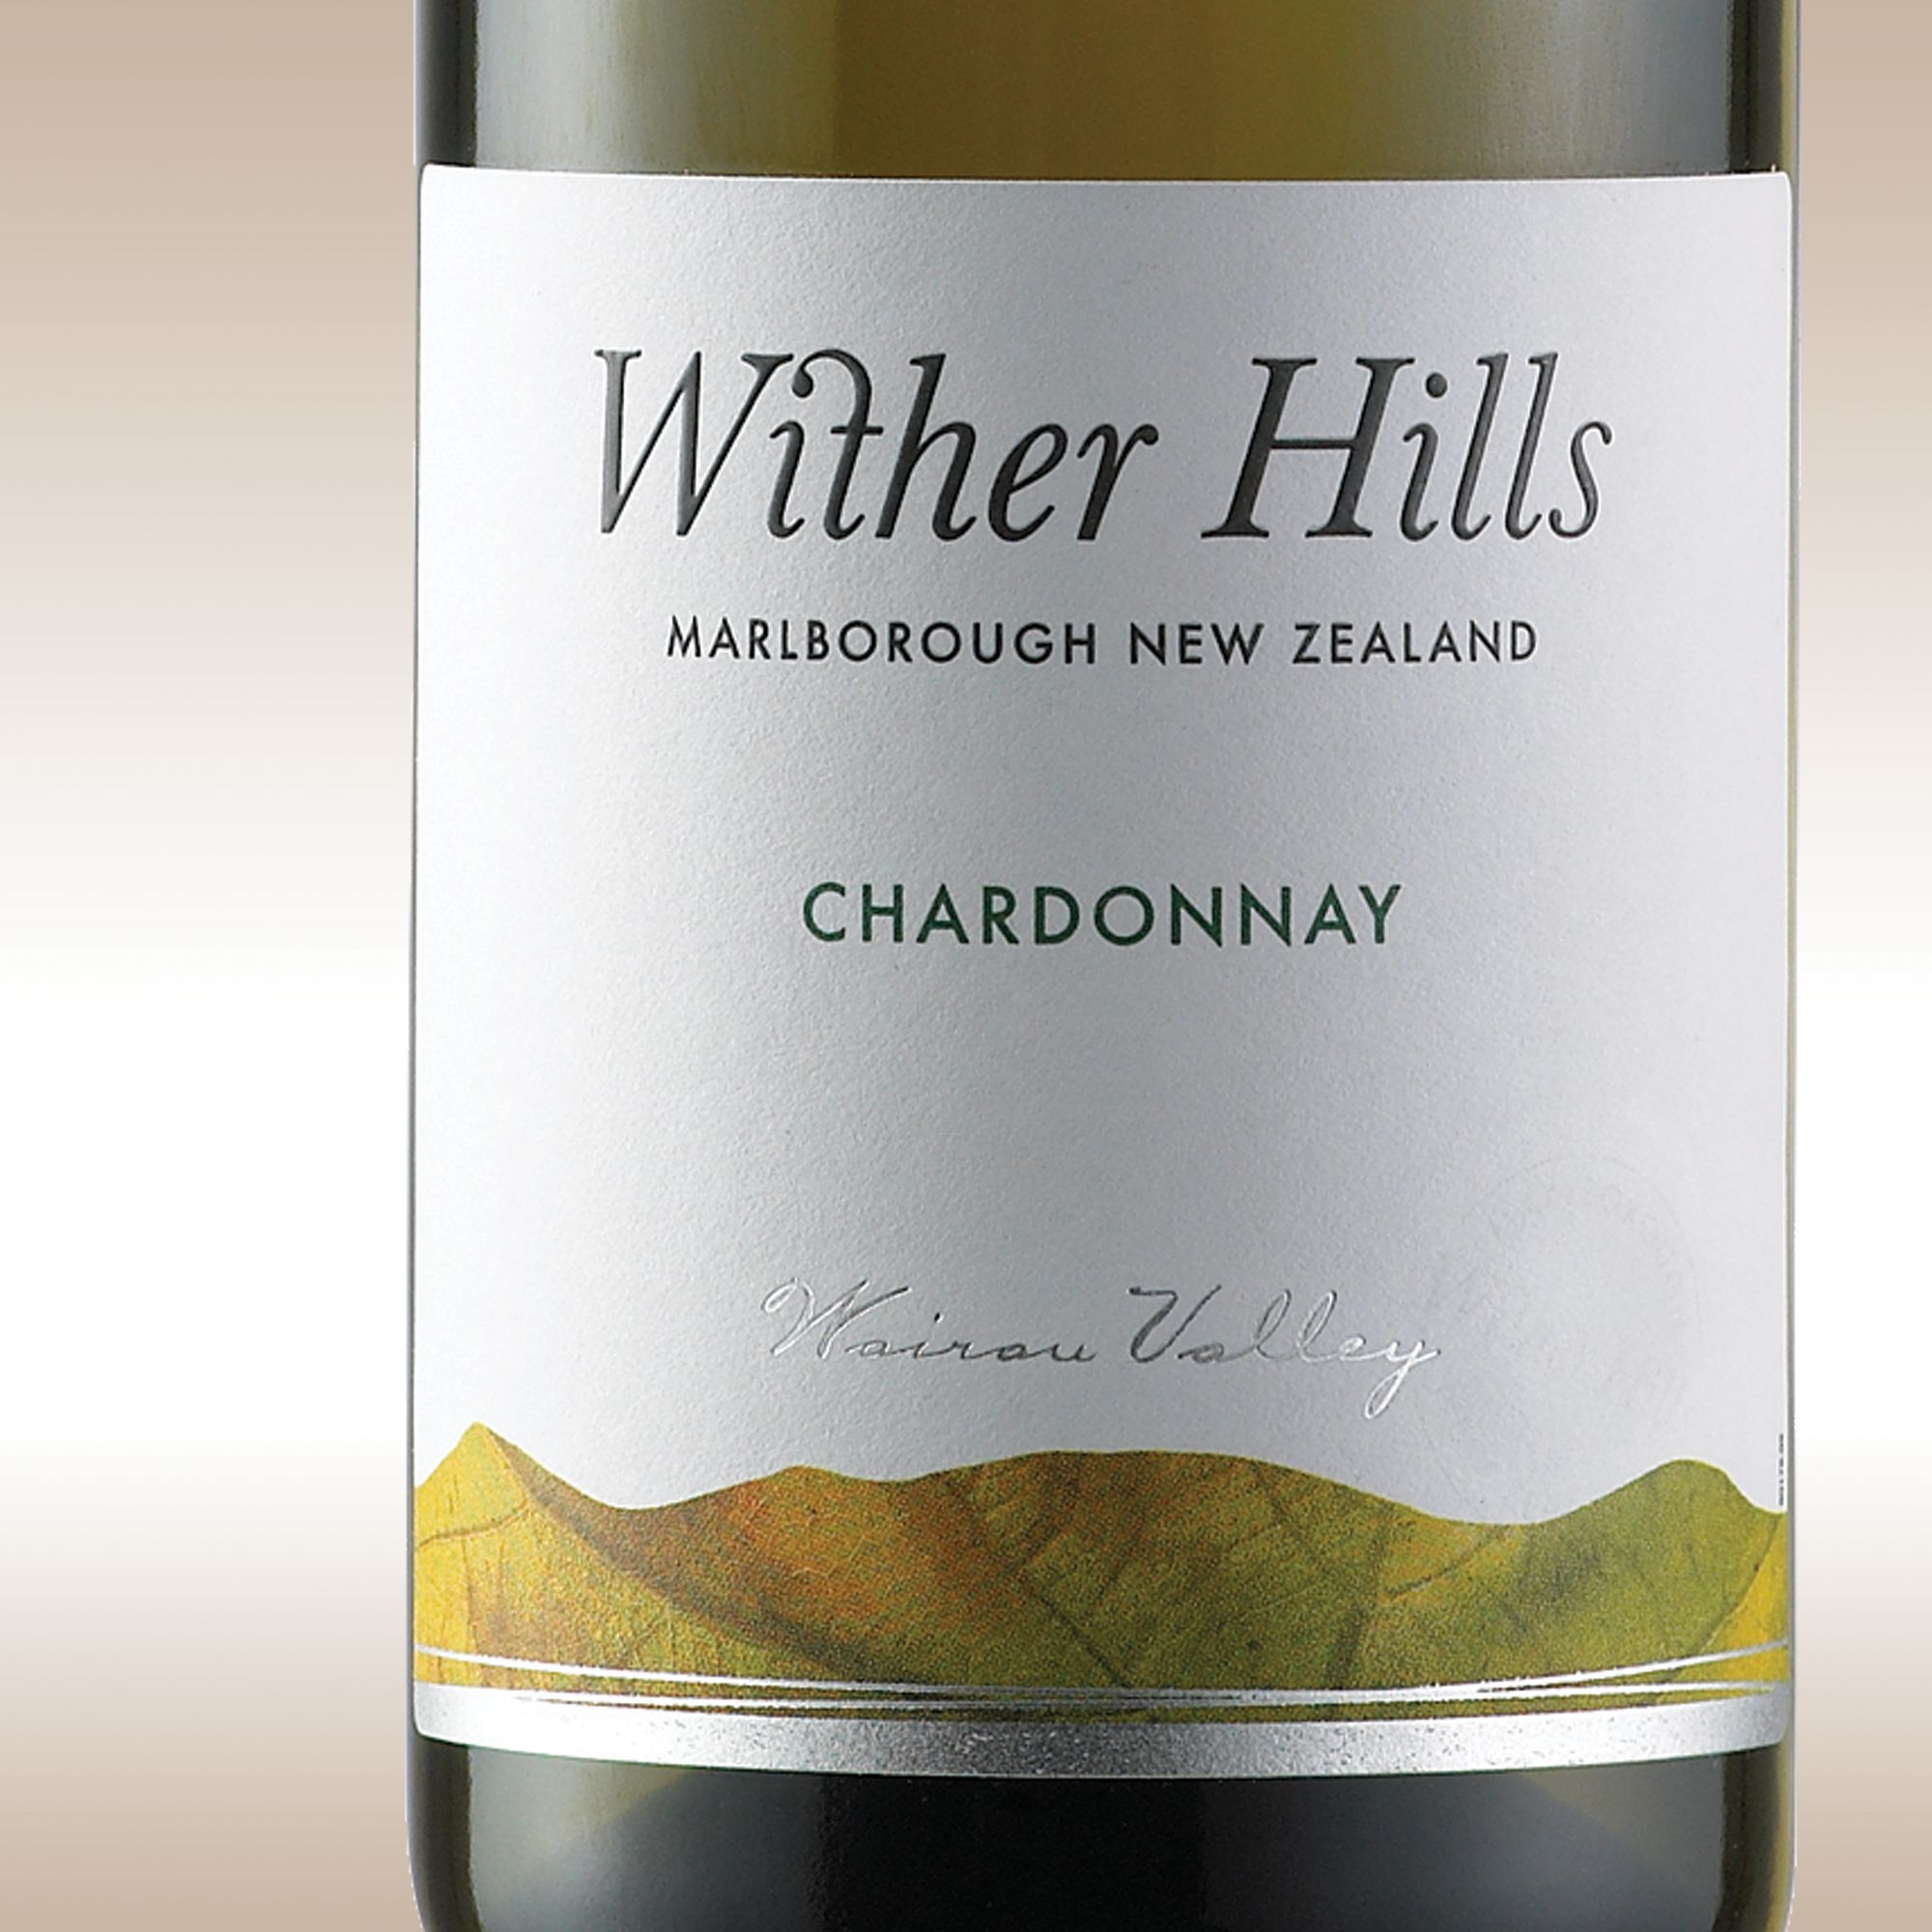 Unbranded Wither Hills Chardonnay 2005/06 Marlborough, New Zealand